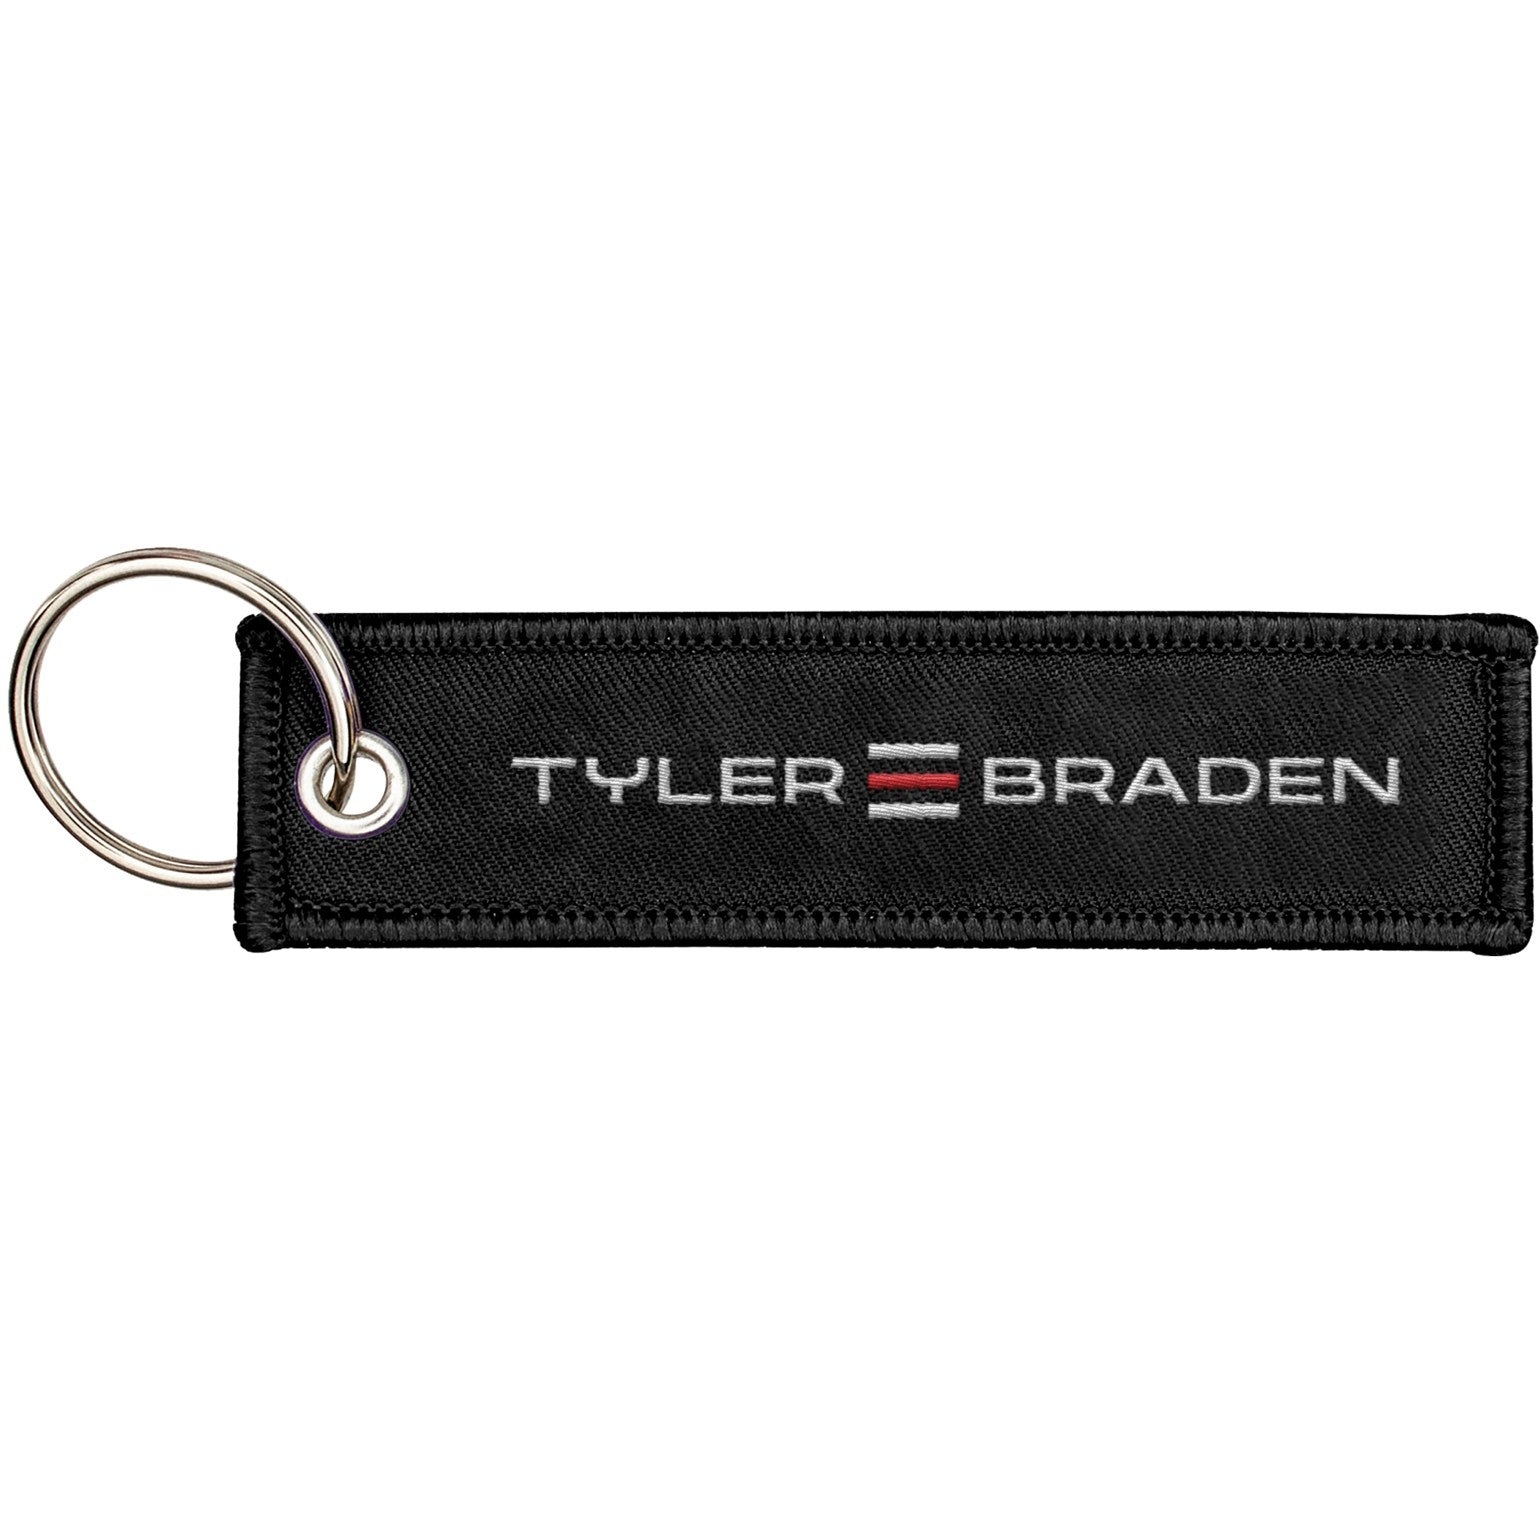 Tyler Braden "Tb" Logo Keychain